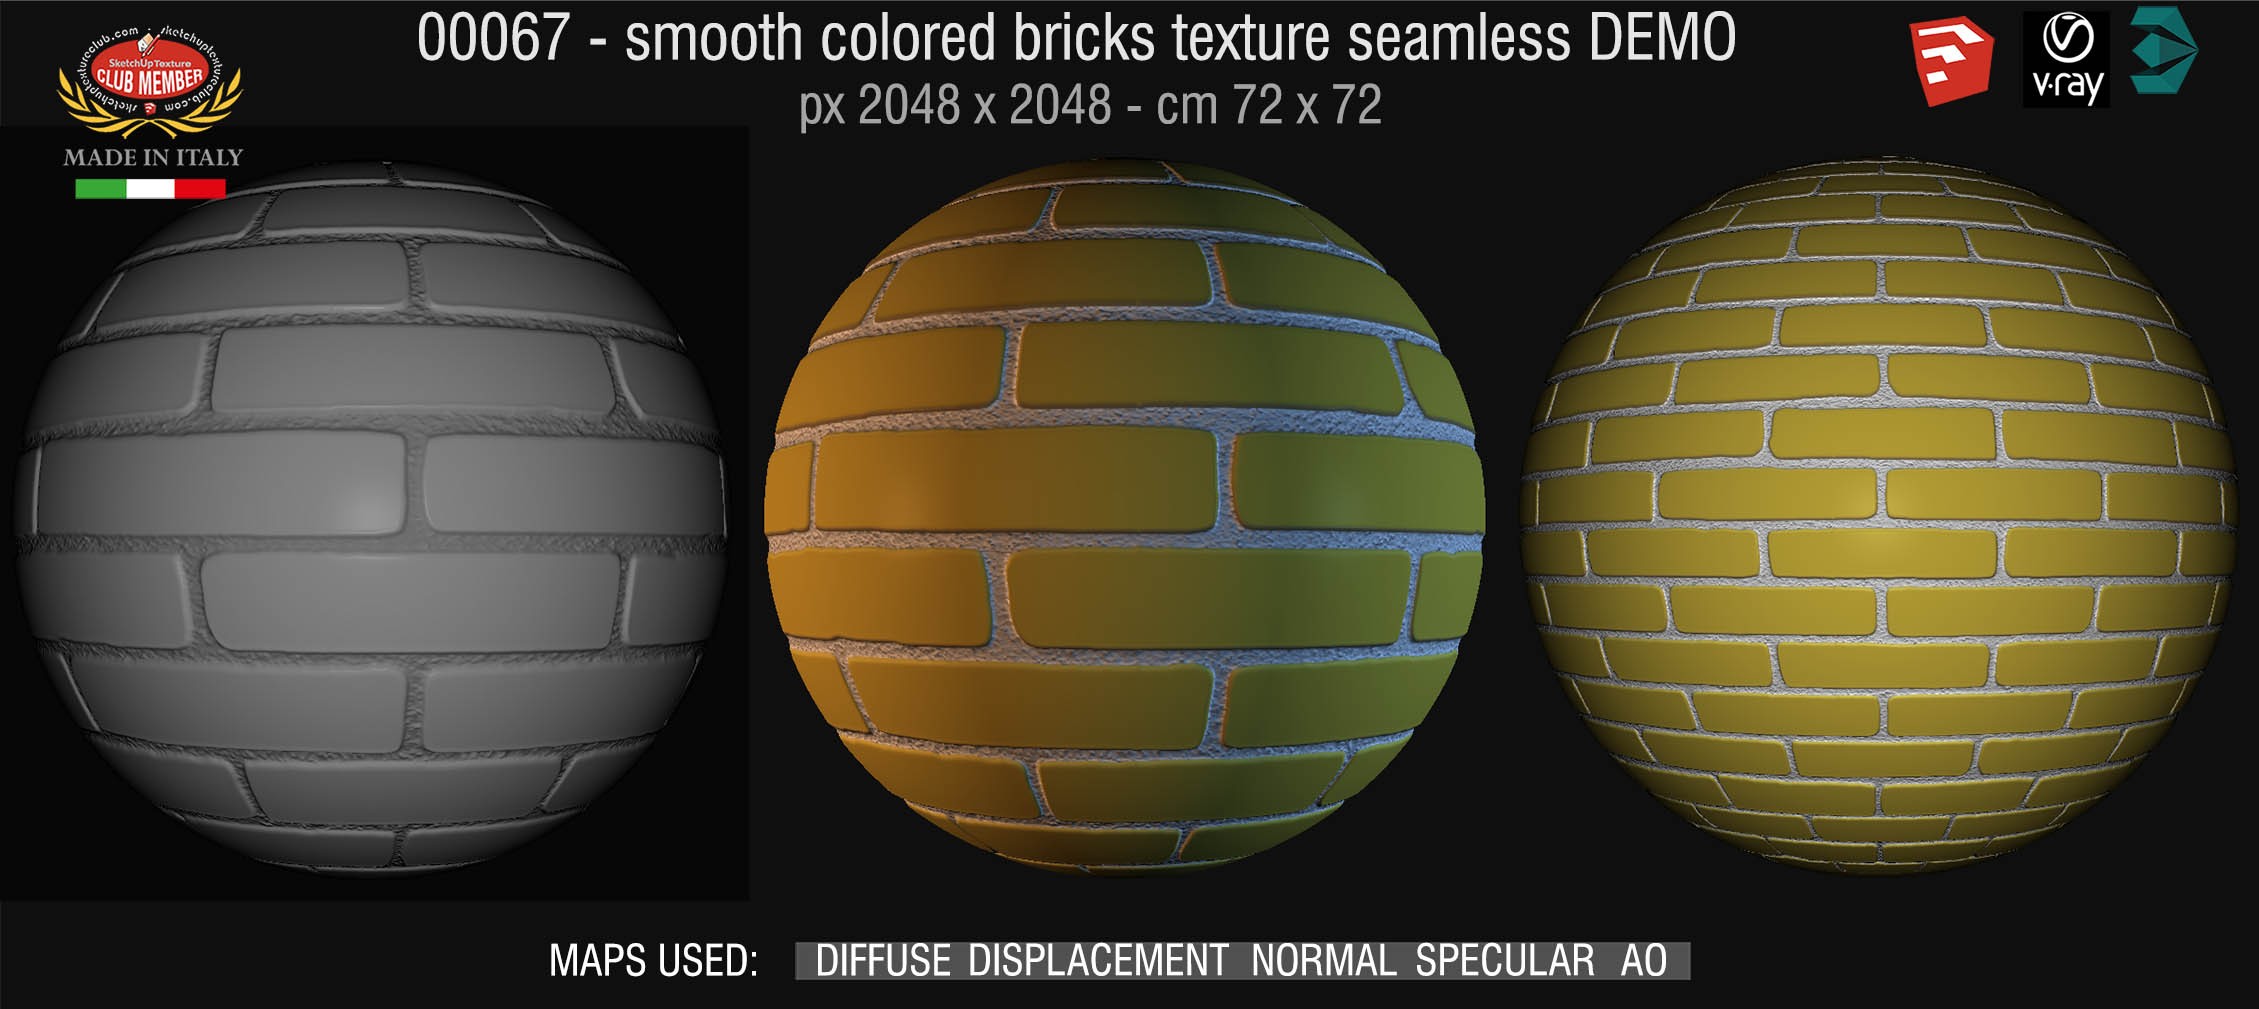 00067 smooth colored bricks texture seamless + maps DEMO